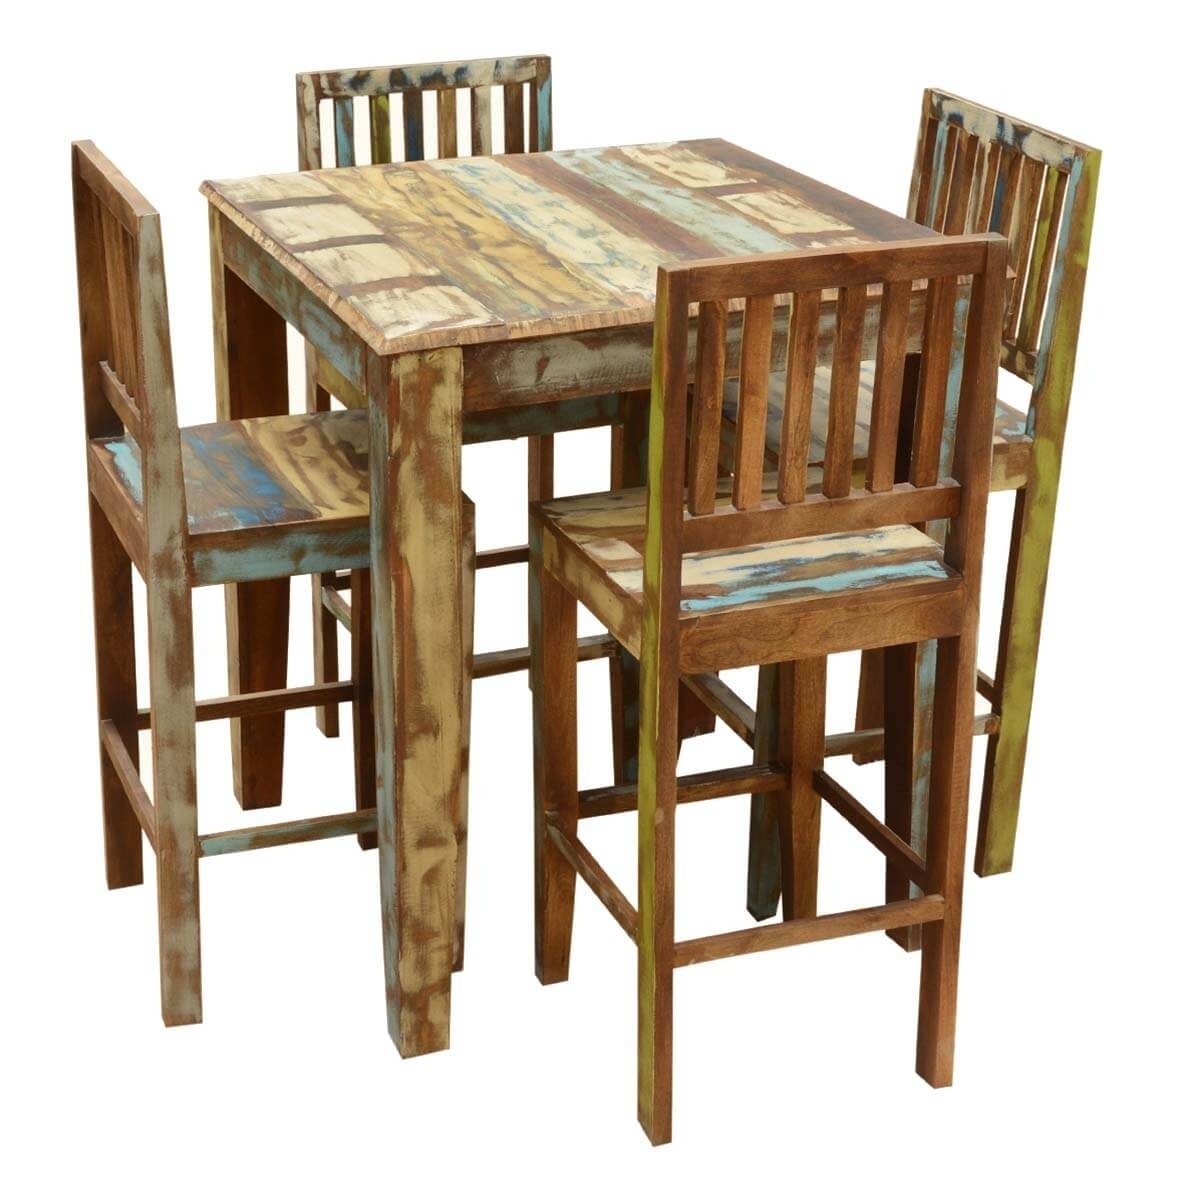 Appalachian rustic reclaimed wood high bar table chair set